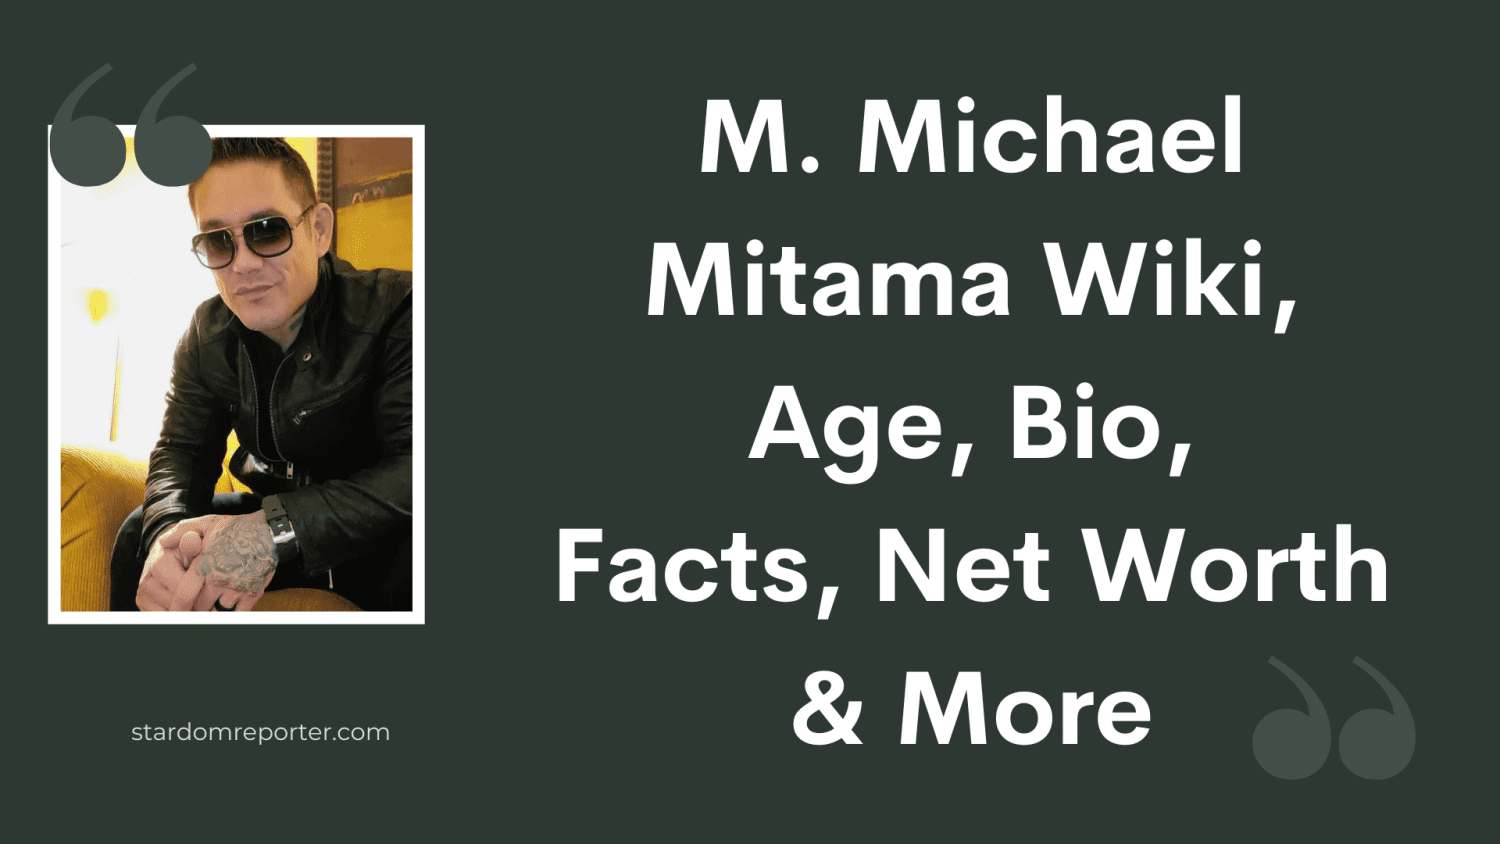 M. Michael Mitama Wiki, Age, Bio, Facts, Net Worth & More - 43